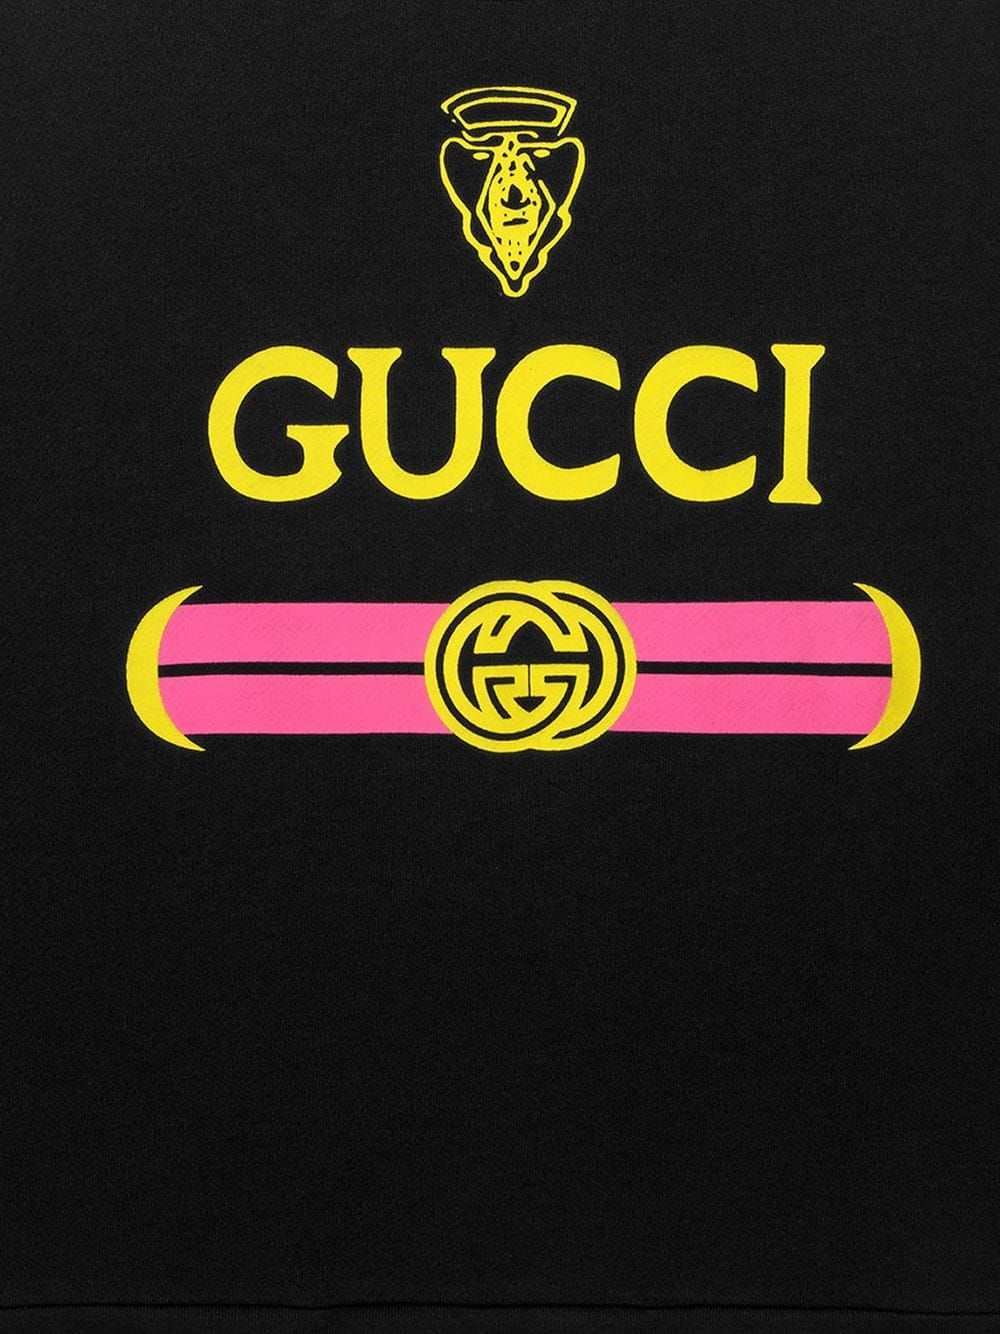 Gucci Cotton Sweatshirt With Gucci Logo. Gucci, Chanel wallpaper, Cotton sweatshirts